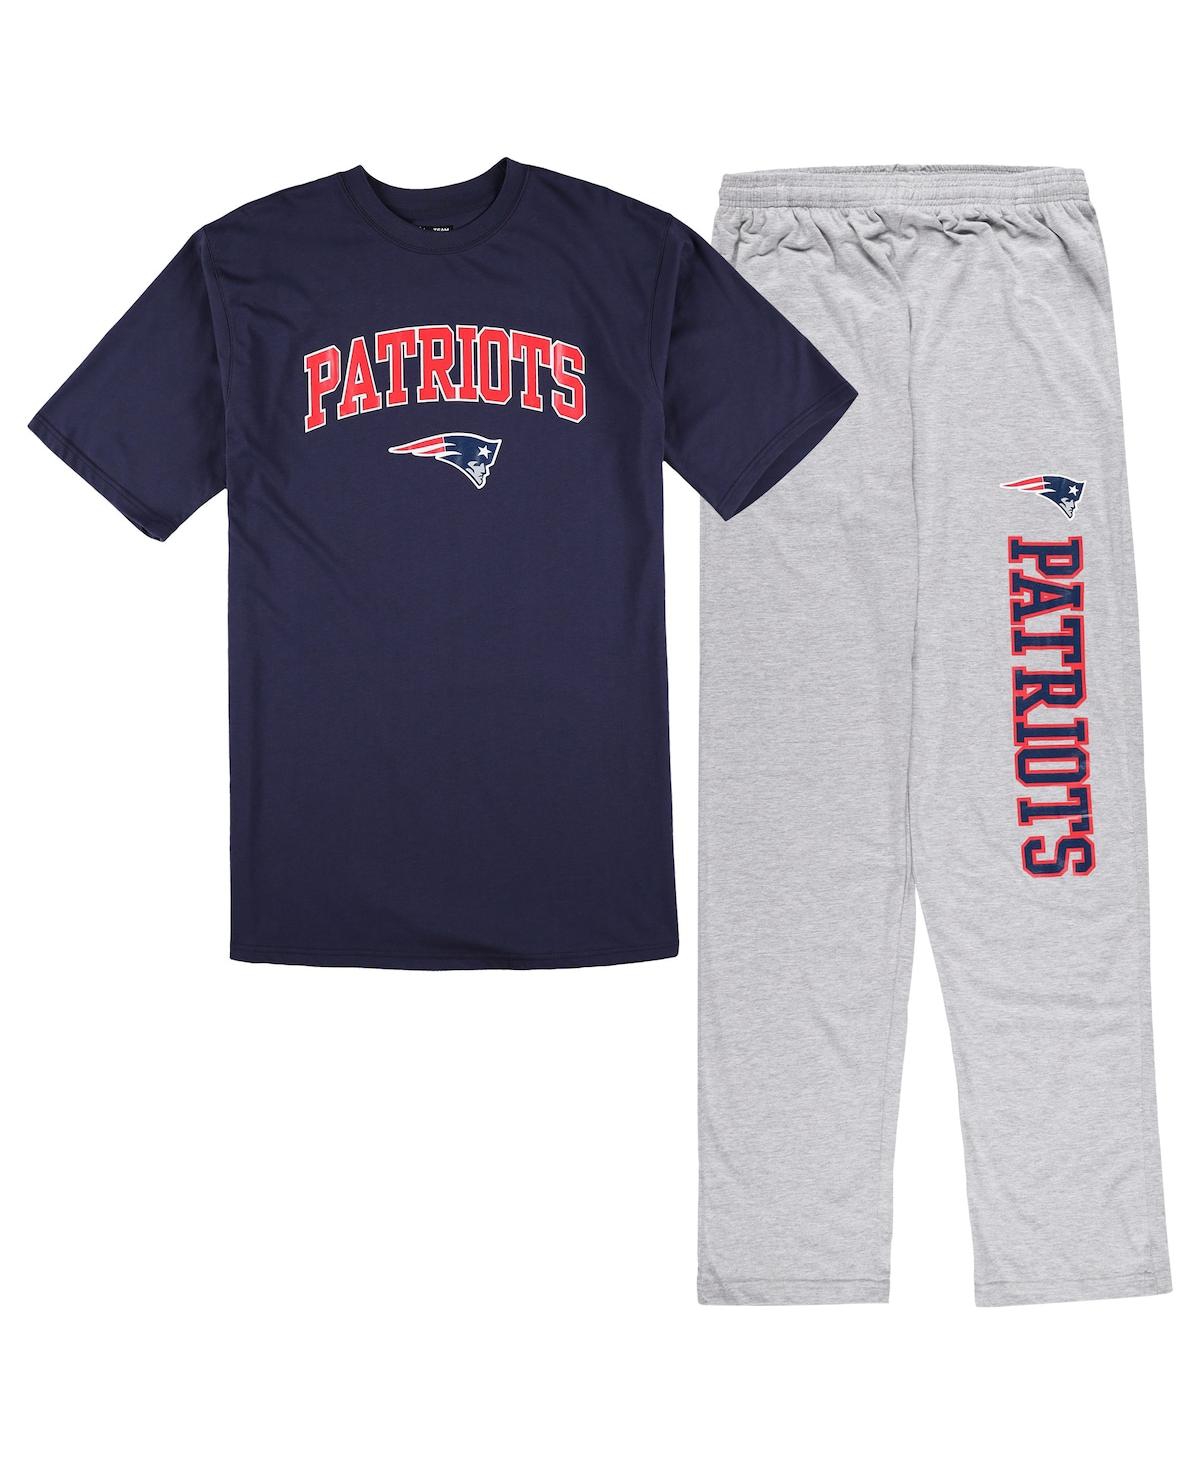 Men's Concepts Sport Navy, Heather Gray New England Patriots Big and Tall T-shirt and Pajama Pants Sleep Set - Navy, Heather Gray